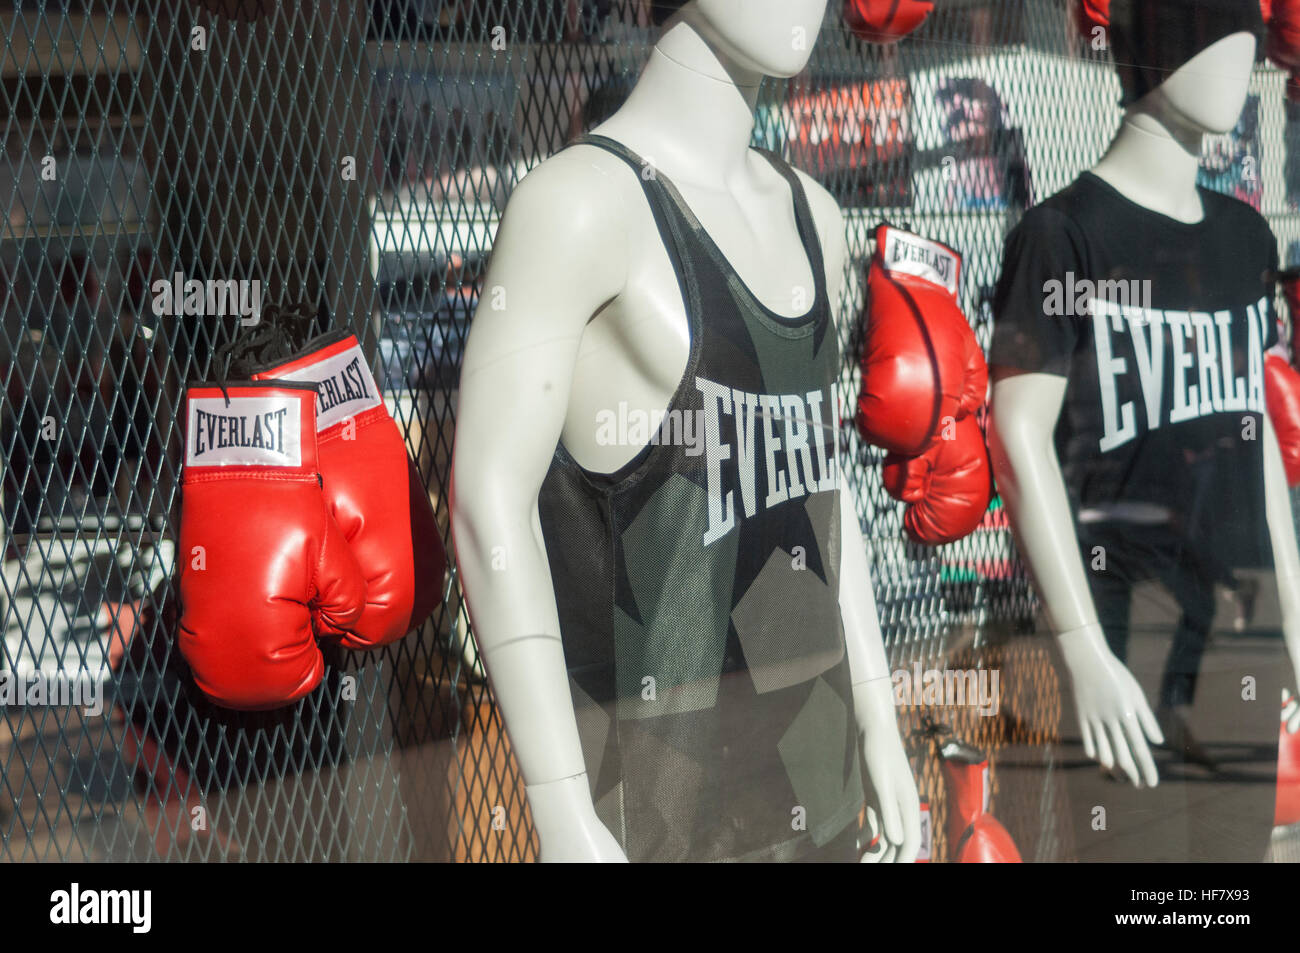 https://c8.alamy.com/comp/HF7X93/everlast-brand-boxing-paraphernalia-in-a-store-in-new-york-on-sunday-HF7X93.jpg